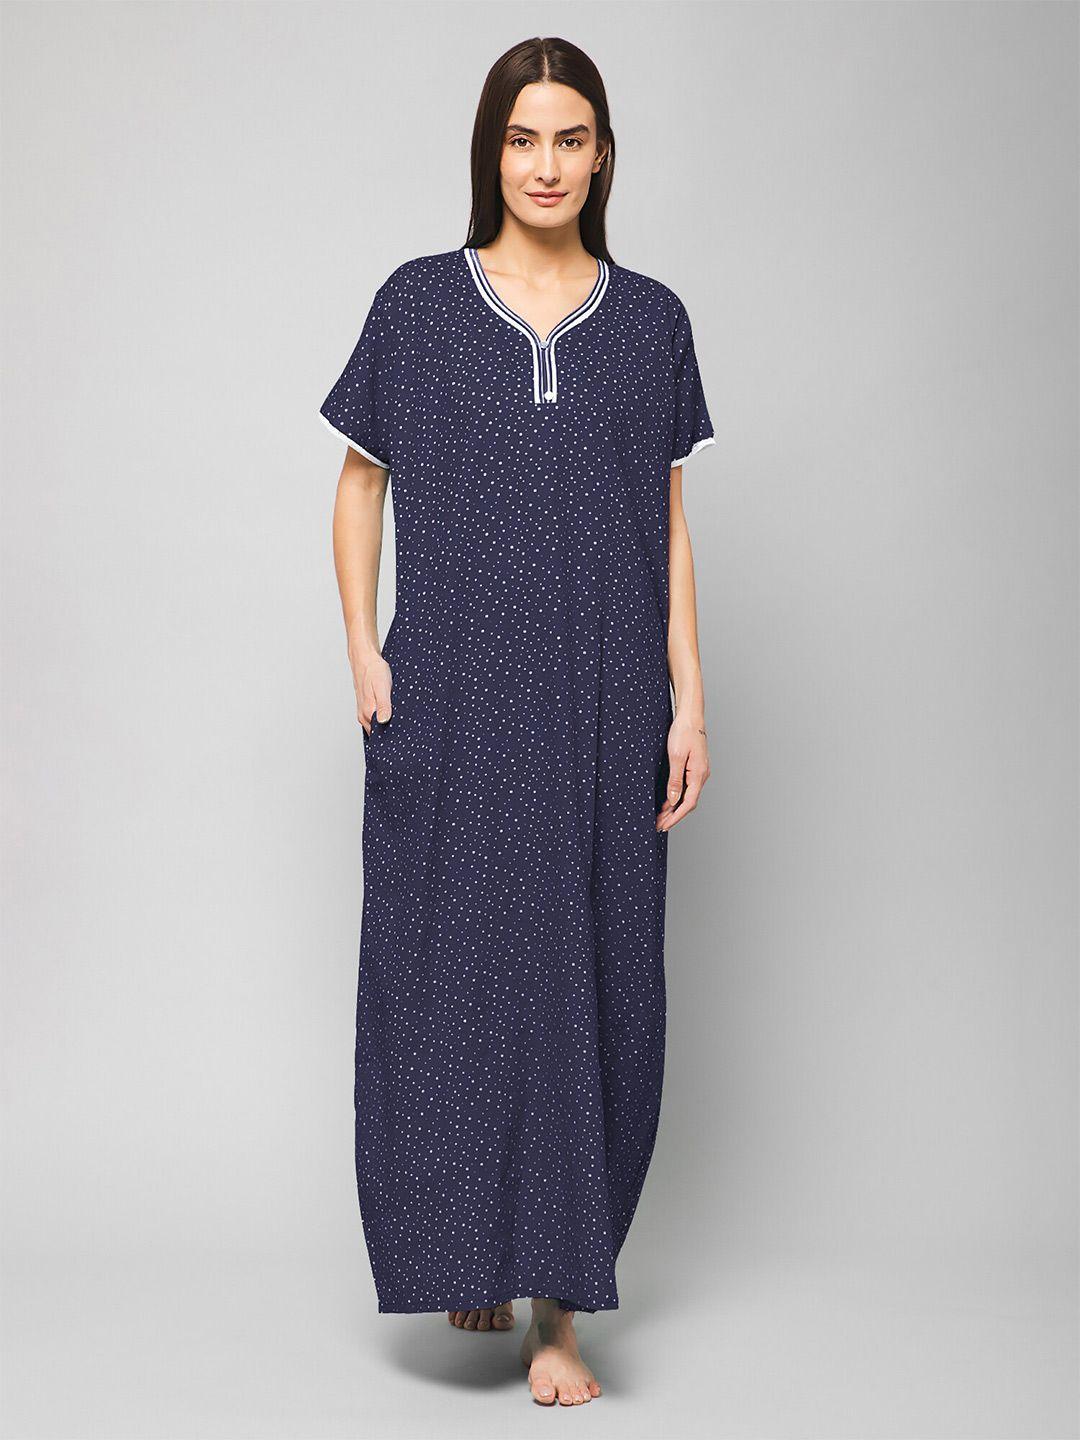 winza-designer-polka-dots-printed-pure-cotton-maxi-nightdress